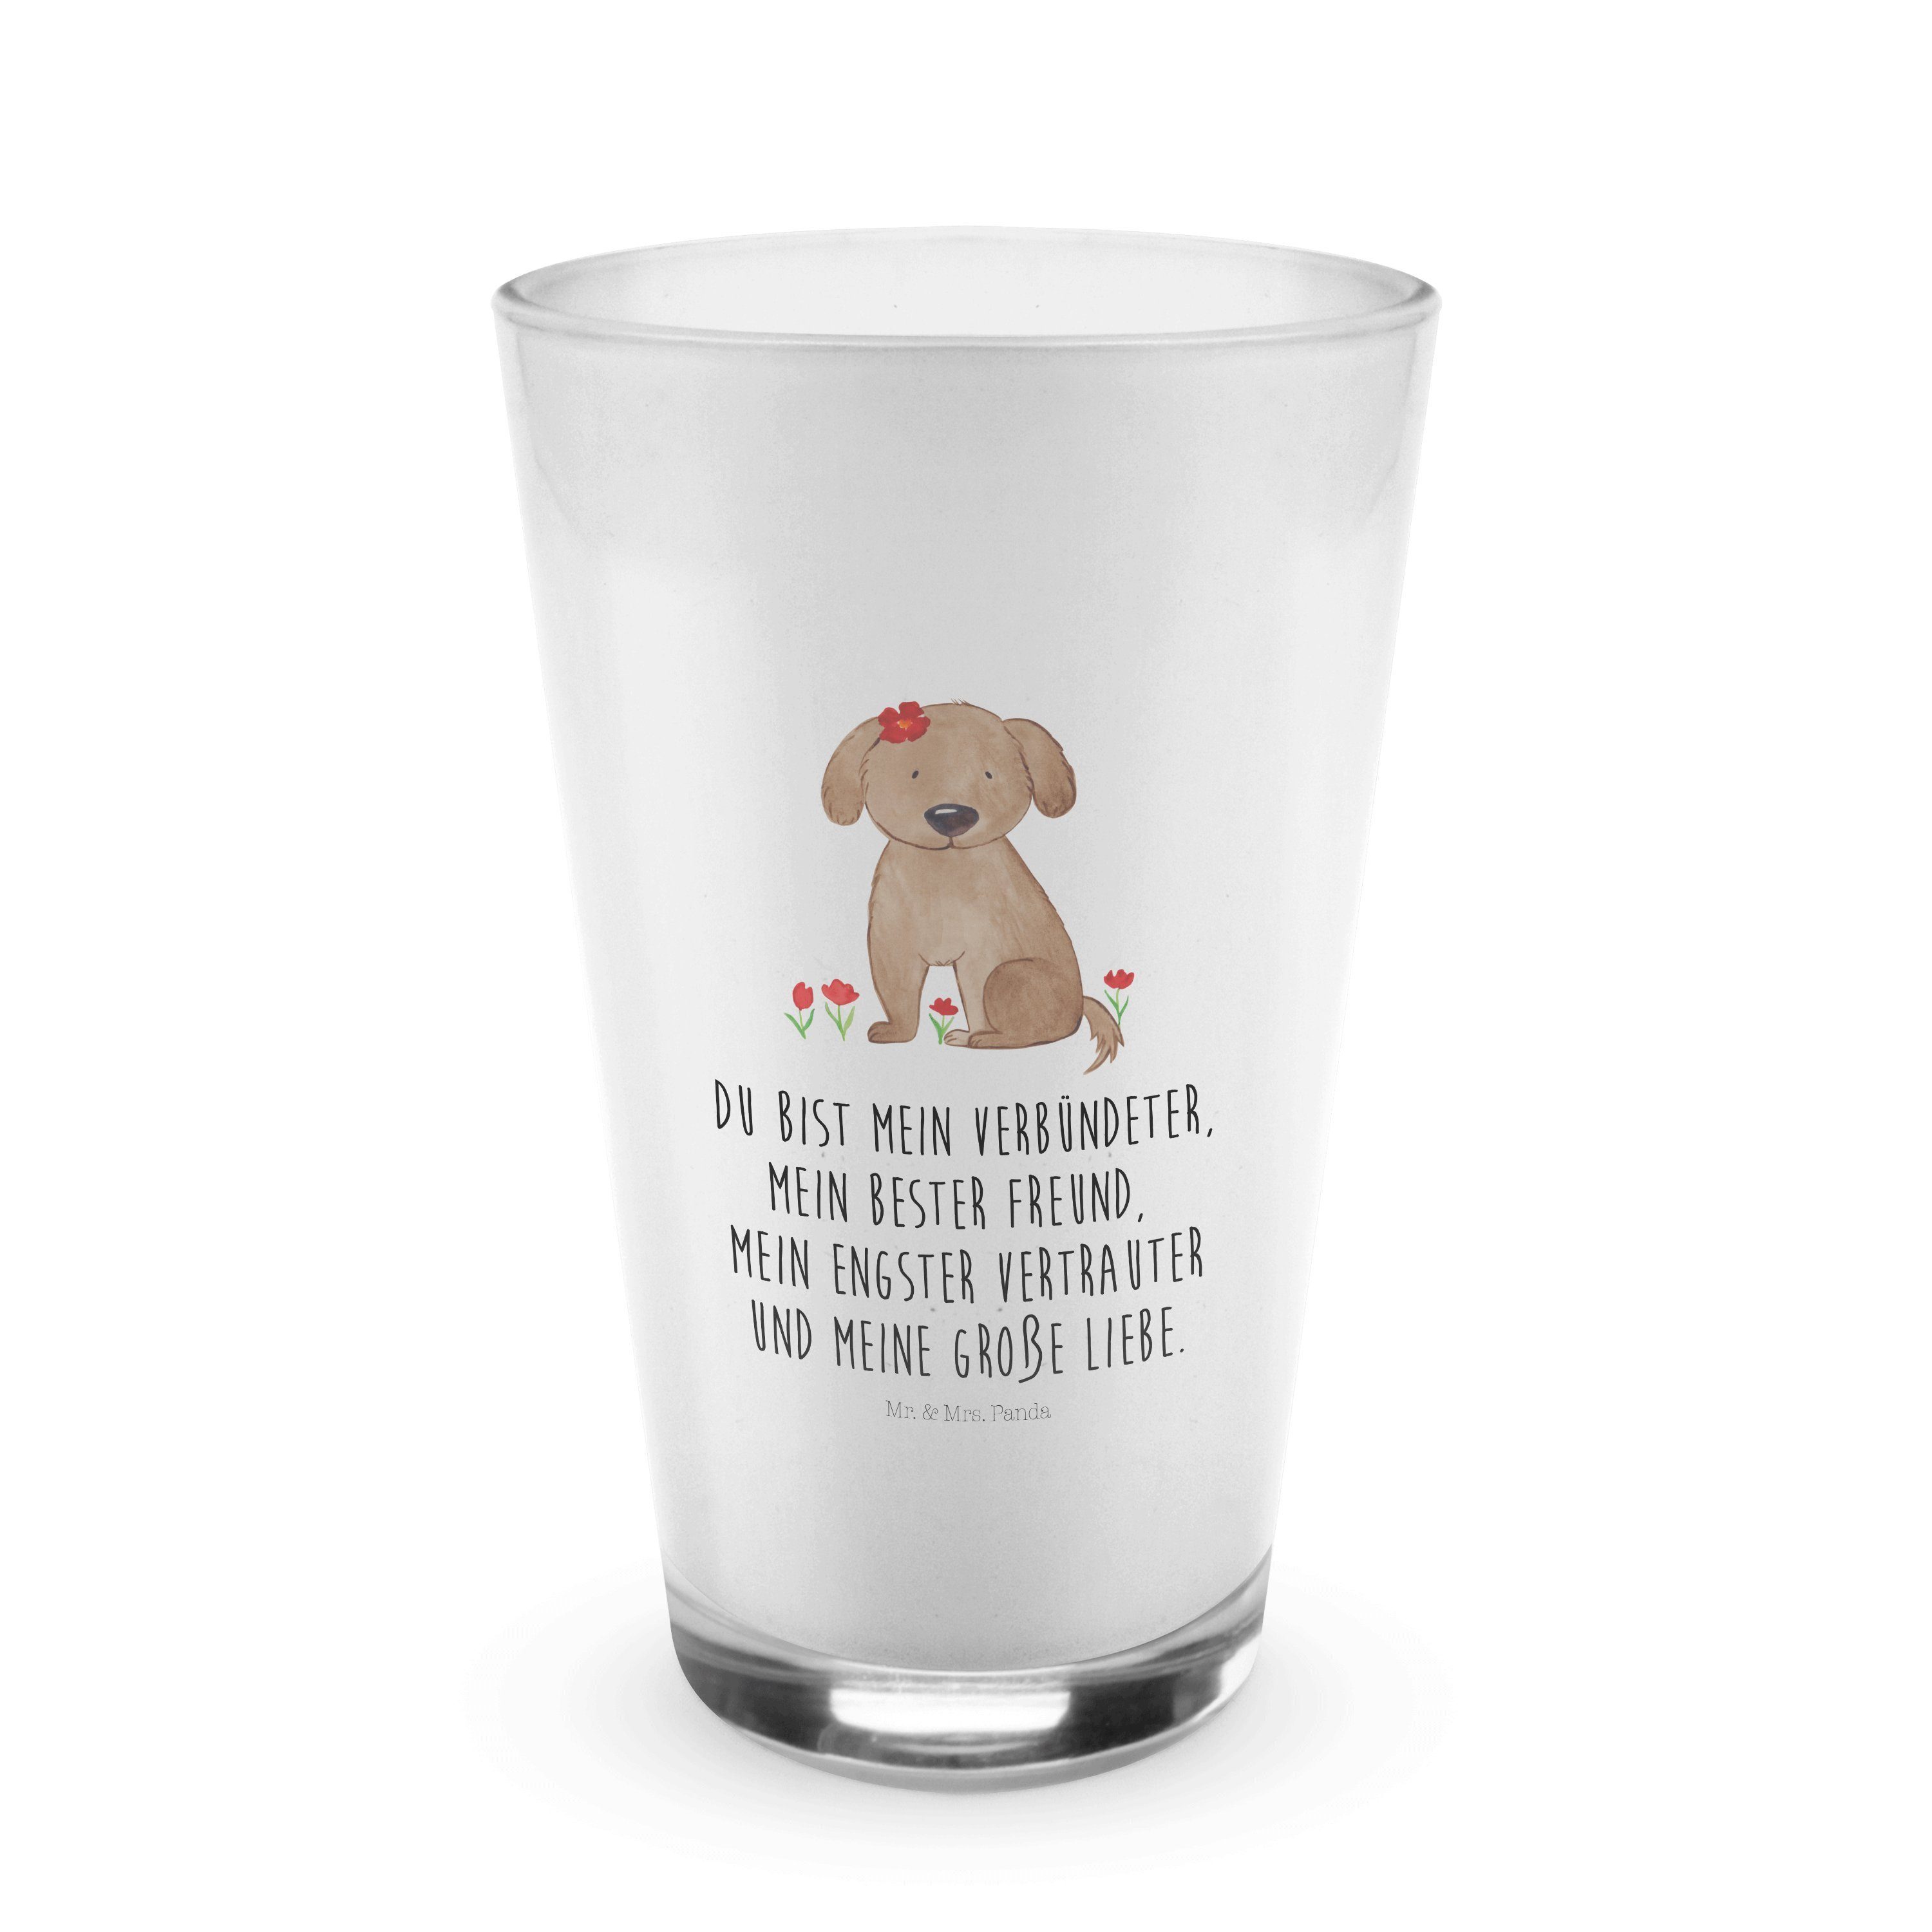 Mr. & Mrs. Premium Glas Glas - Tasse, Geschenk, Hund Cappuccino Hundemama, - Panda Transparent Hundedame